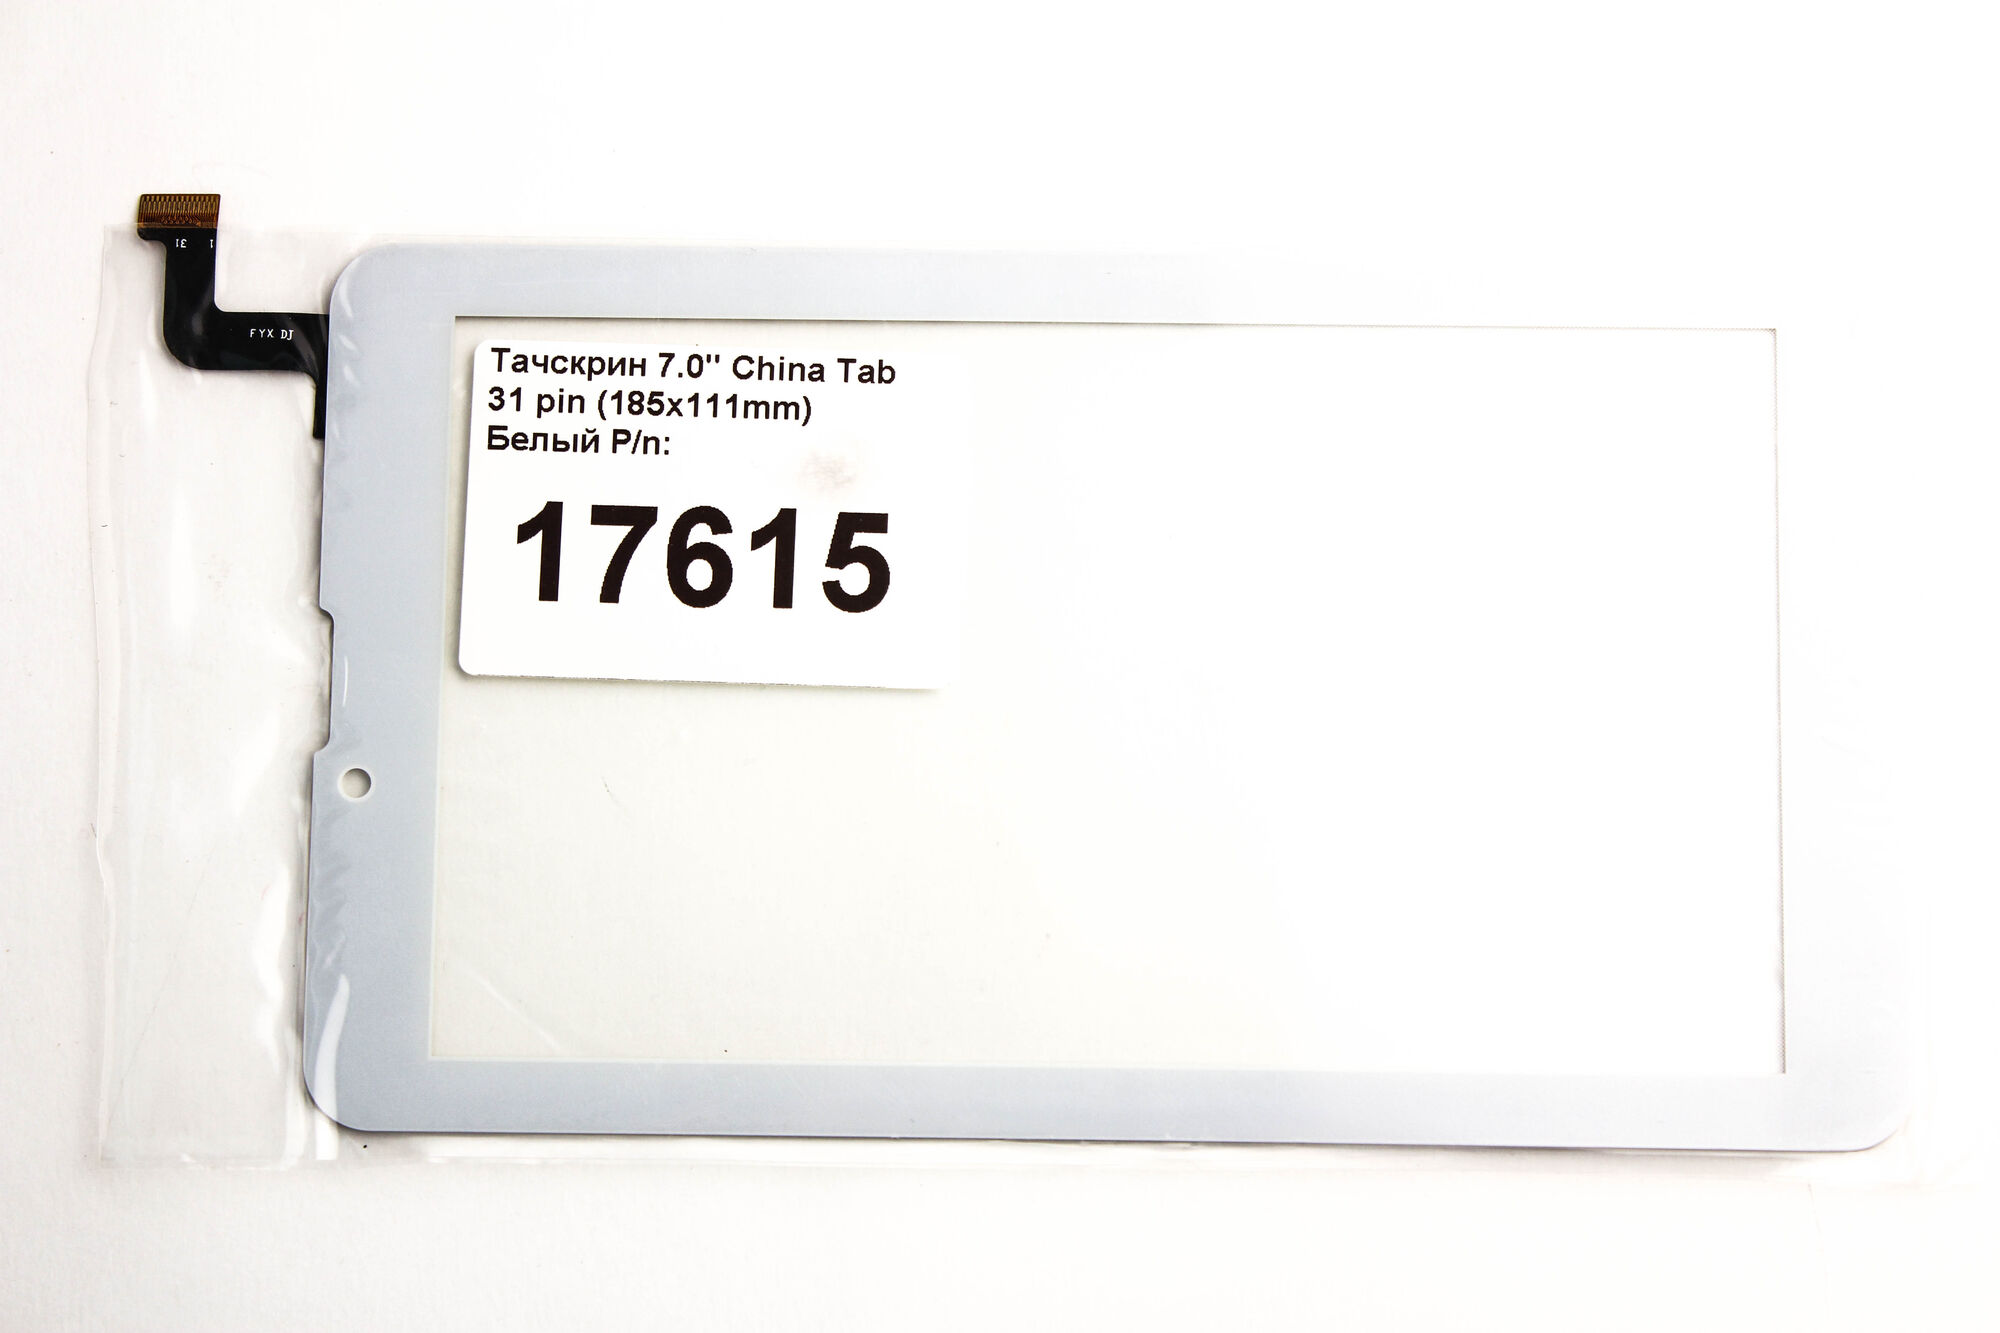 Тачскрин 7.0'' China Tab 31 pin (185х111mm) Белый p/n: XC-PG0700-197-FPC-A0